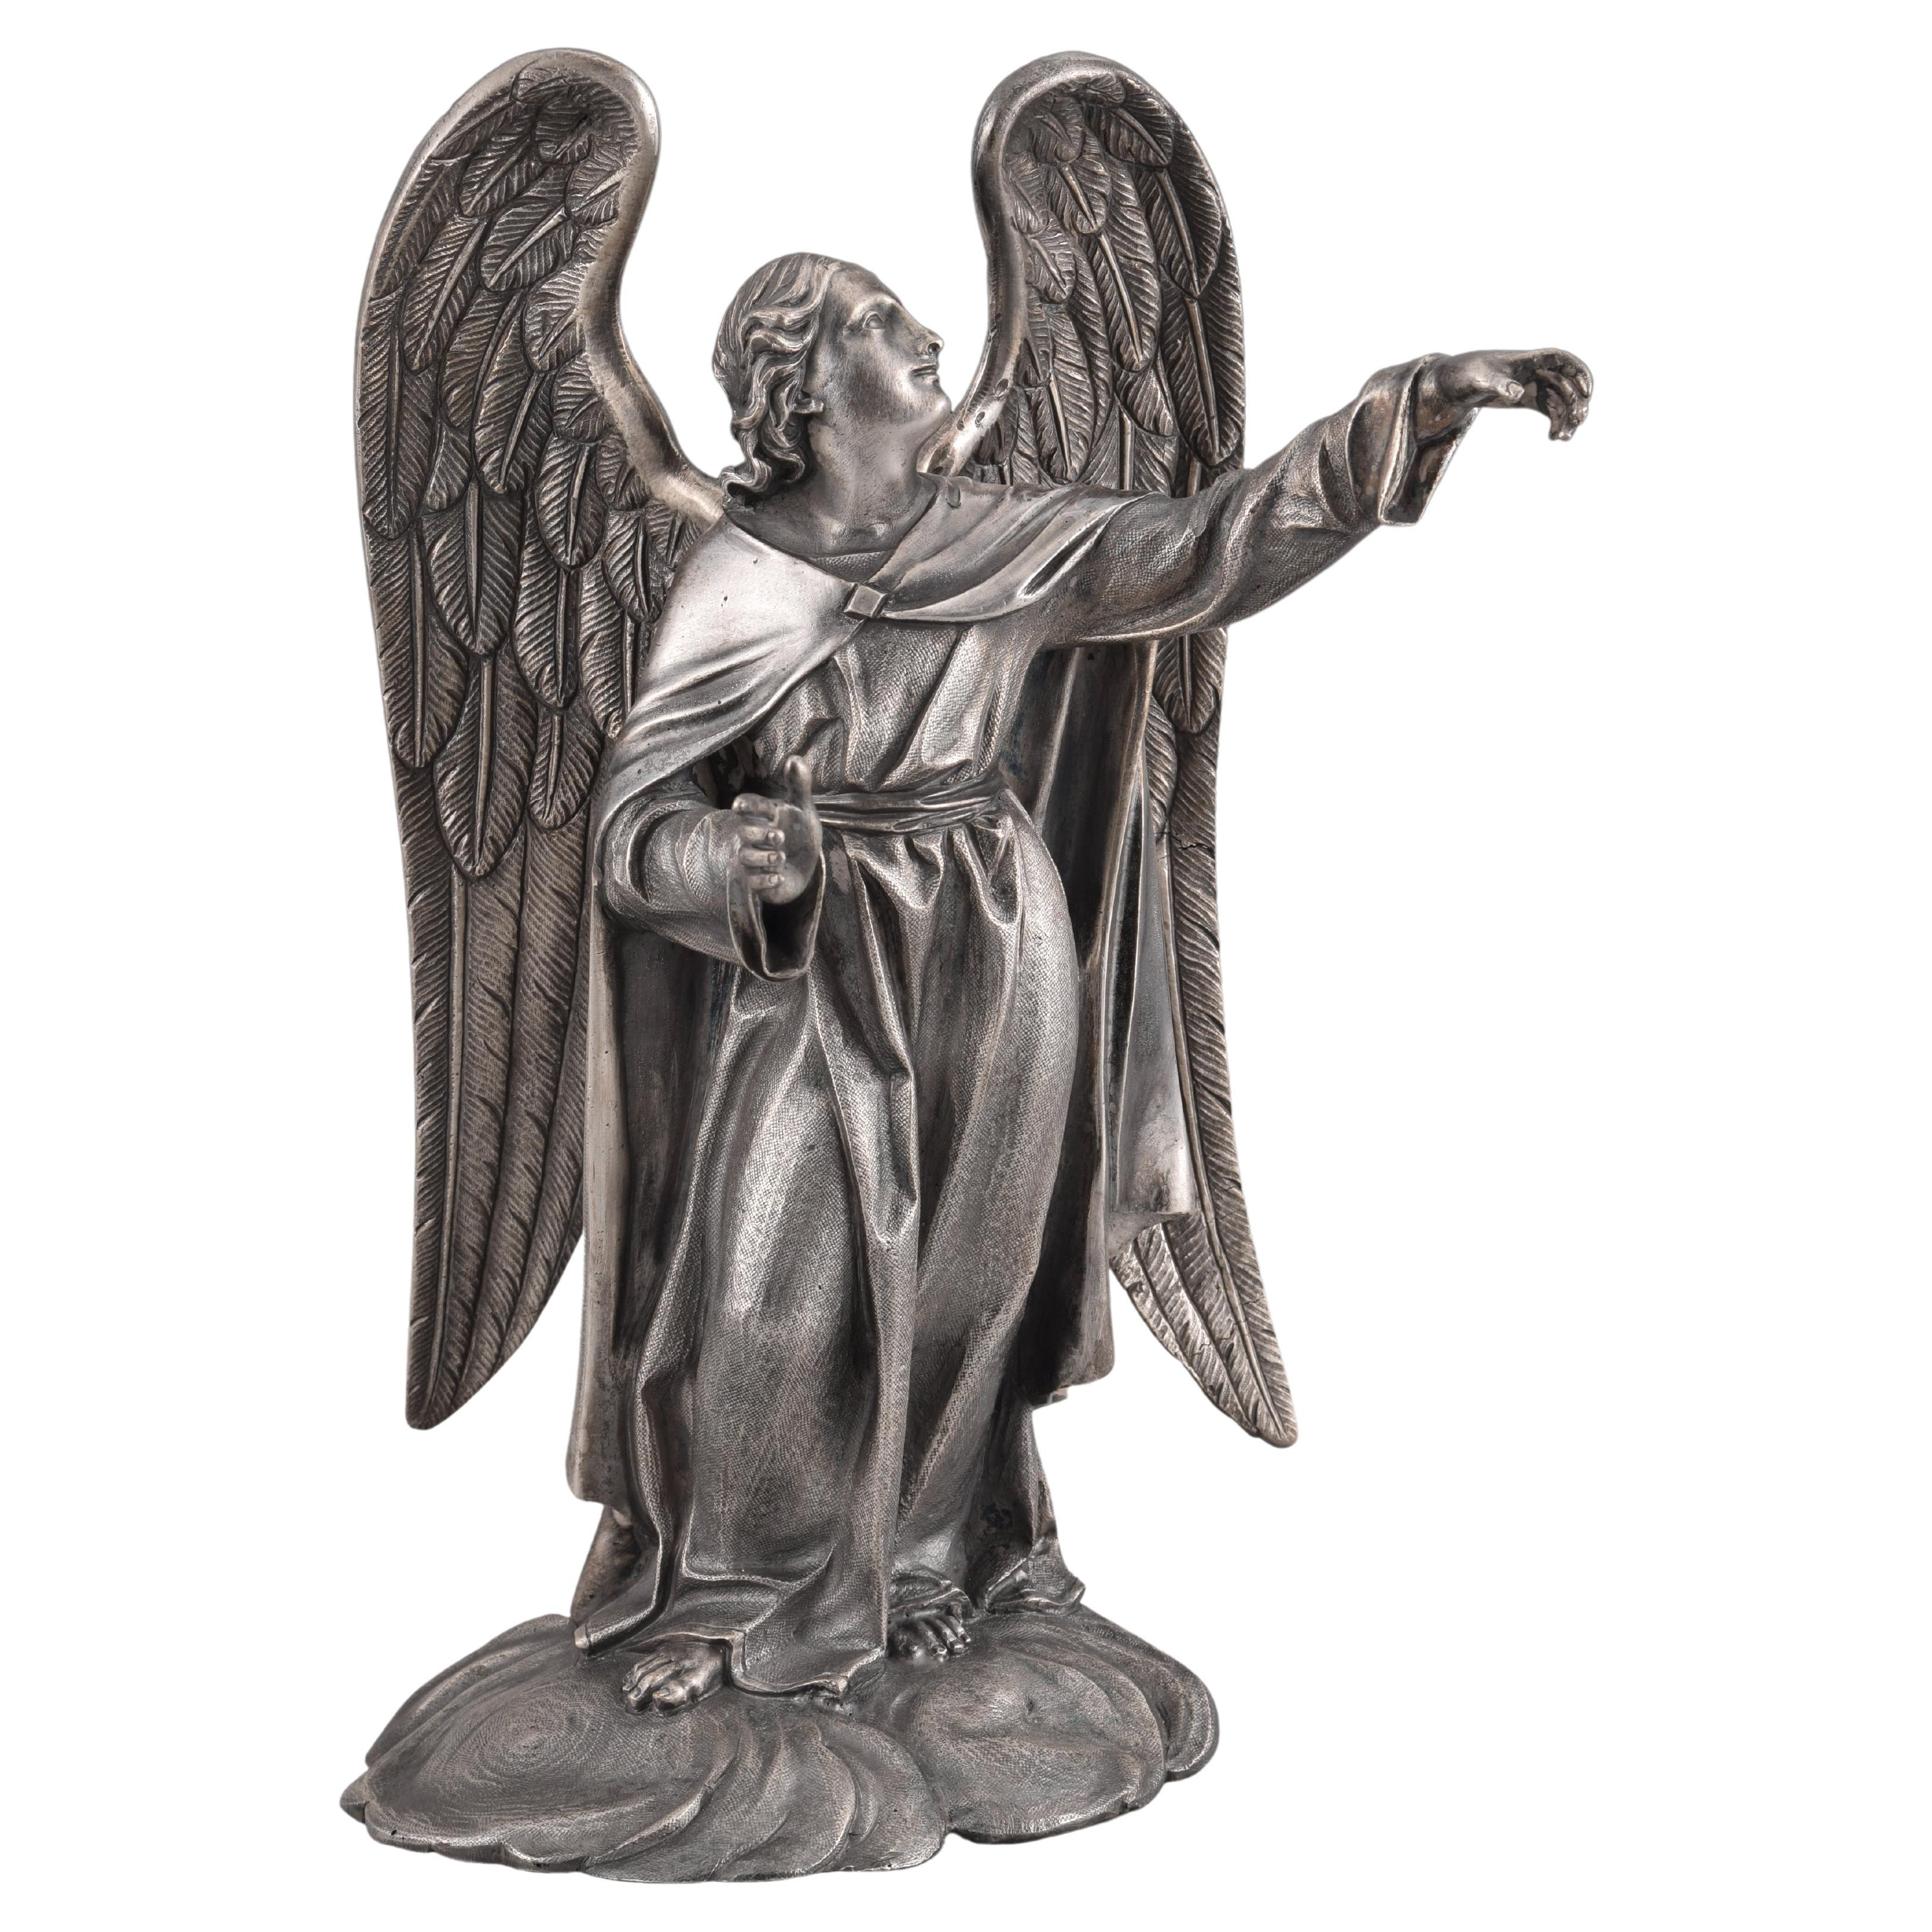 Angel or Archangel, métal, XIXe siècle